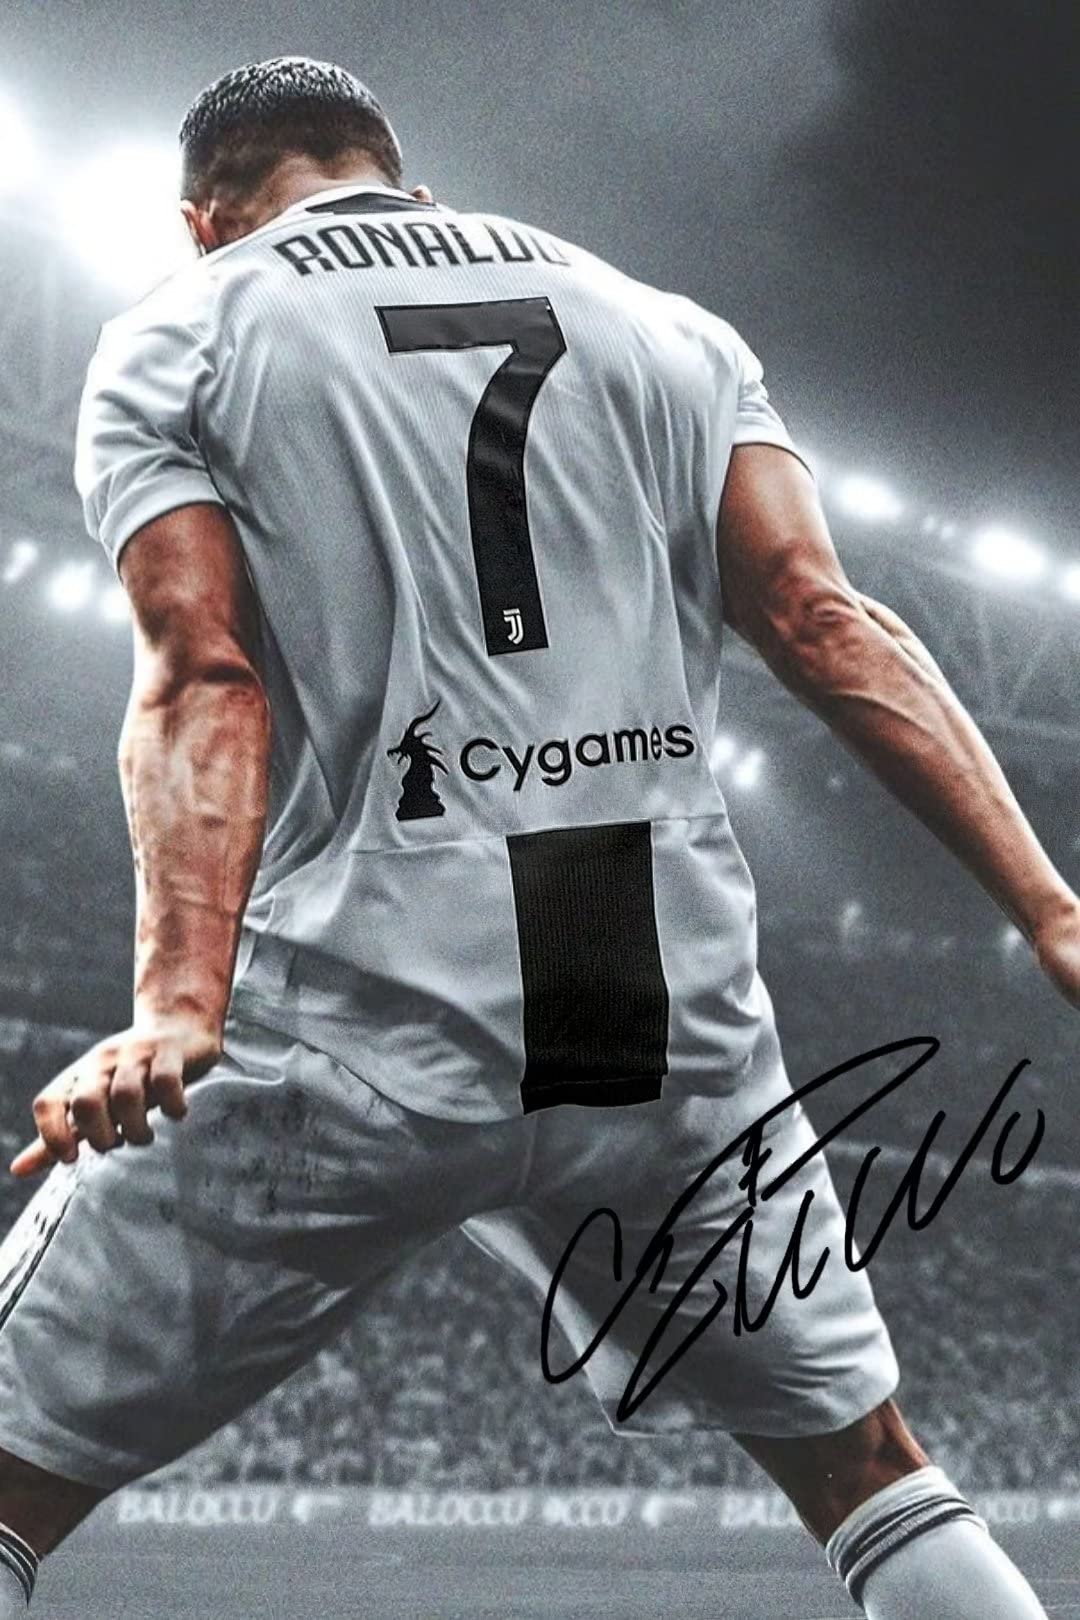 Amazon Yhsgy Ronaldo Poster S Unframed Inches